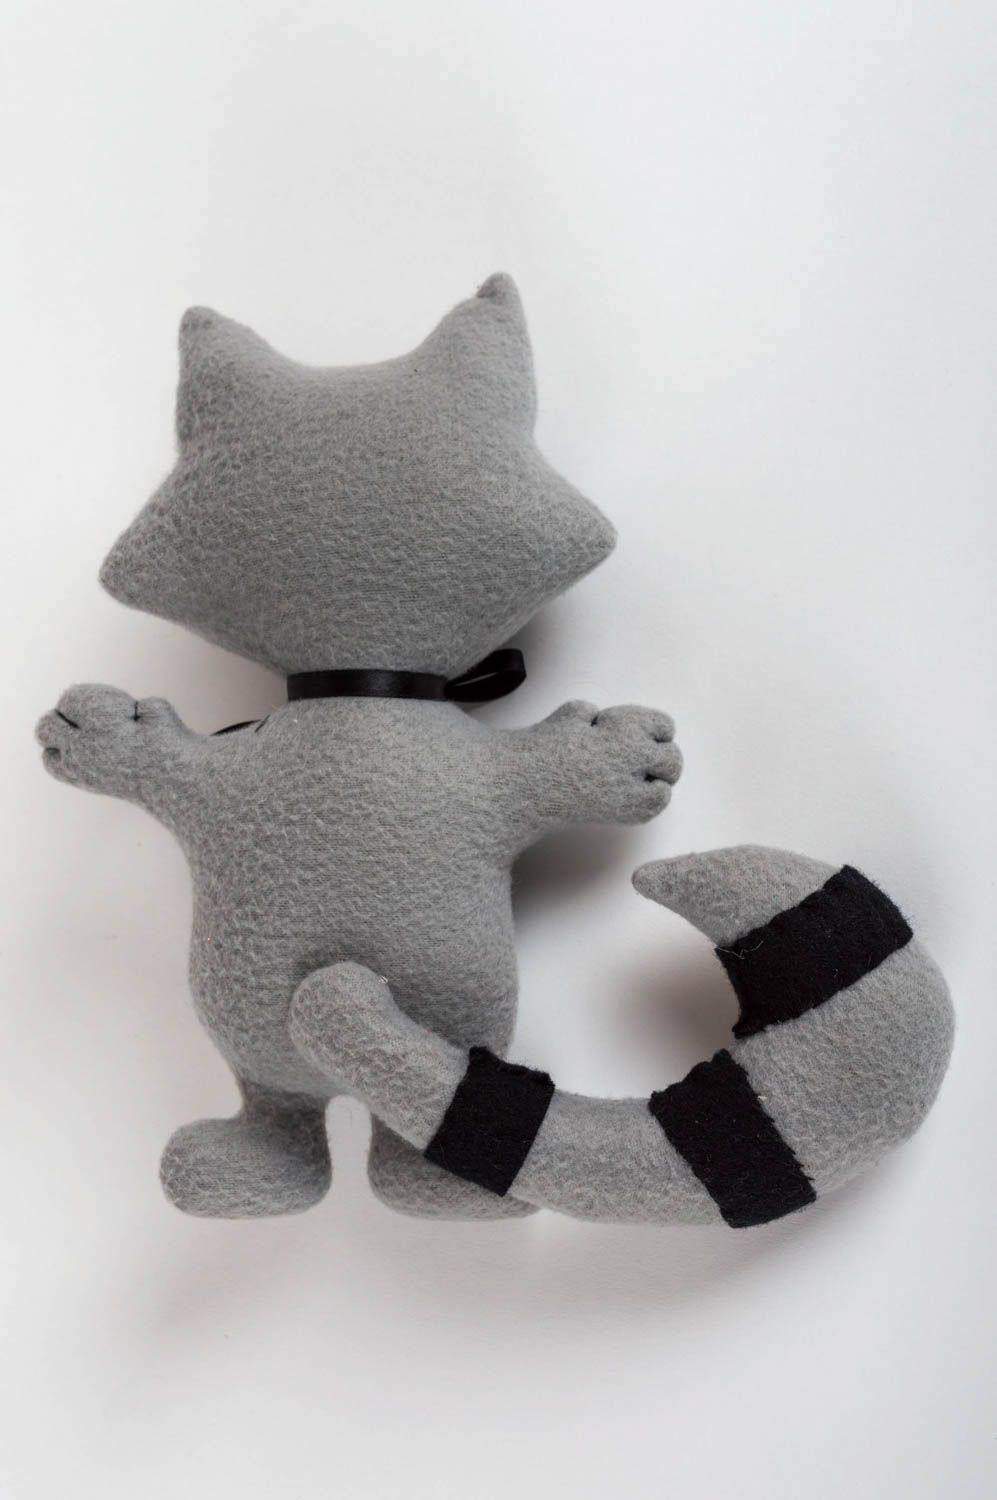 Handmade fabric soft toy stylish raccoon interior design and kids gift ideas photo 5